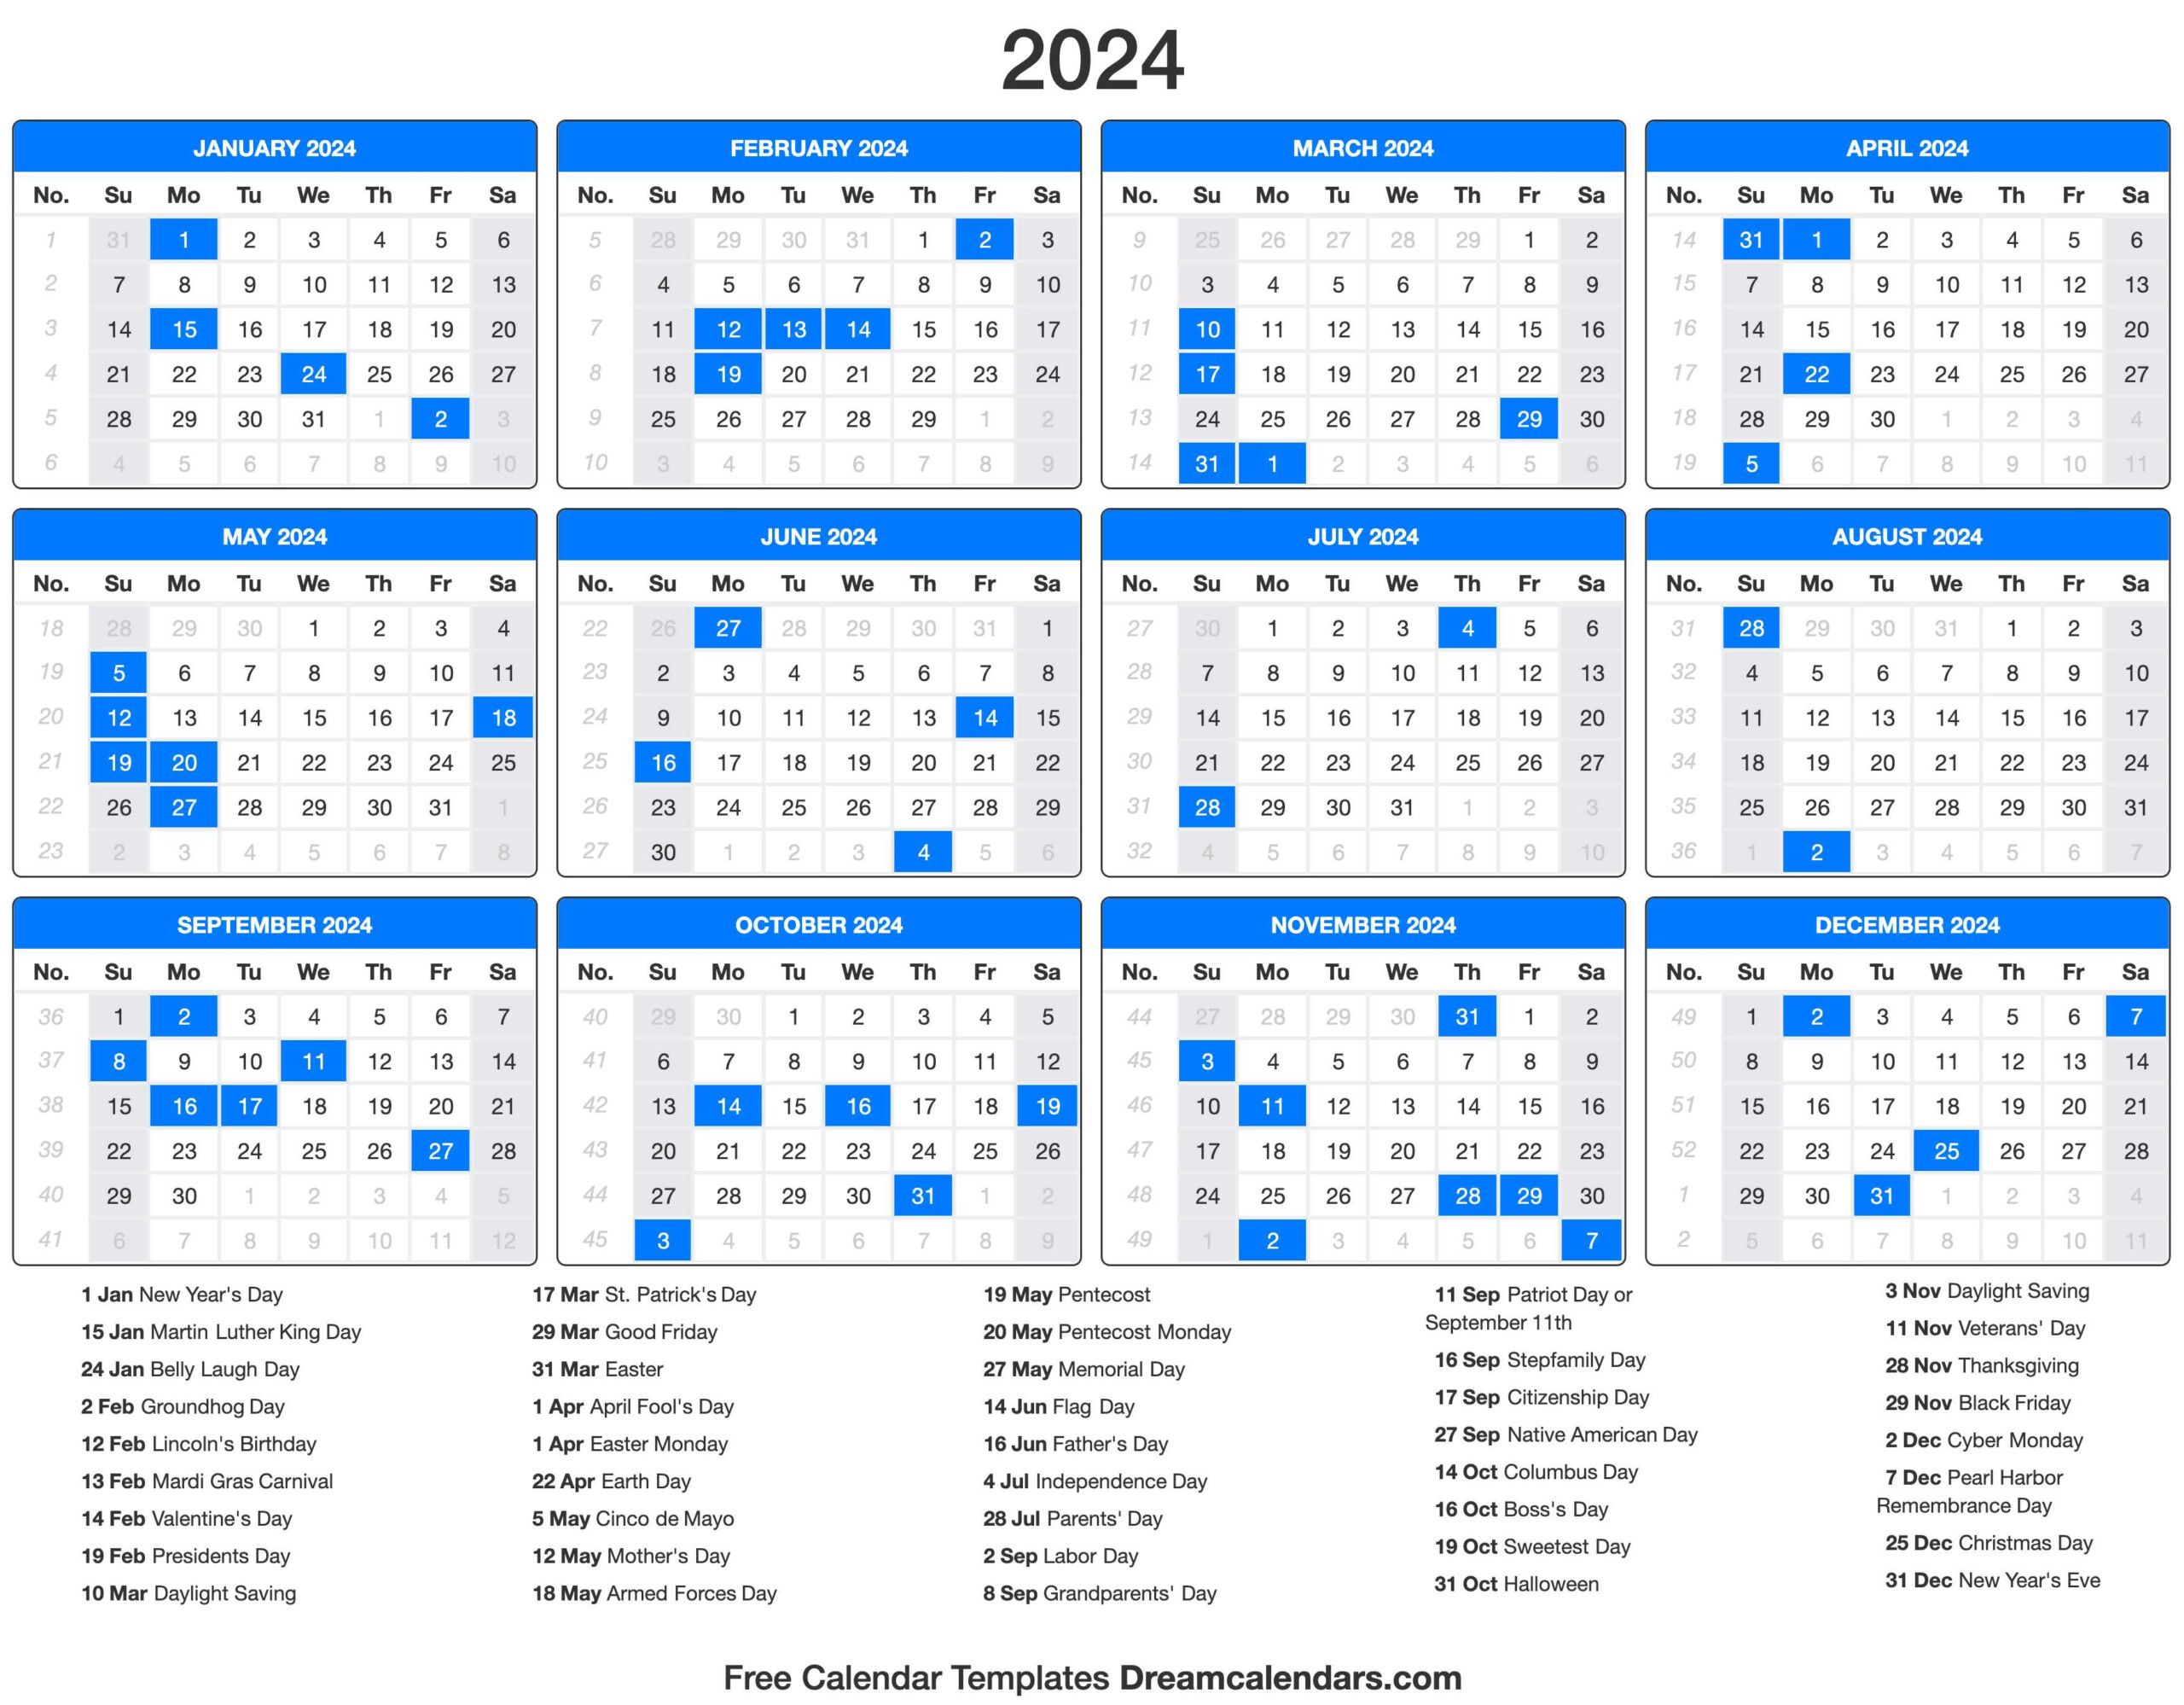 Ocean City Md Calendar Of Events 2024 Danna Elfreda